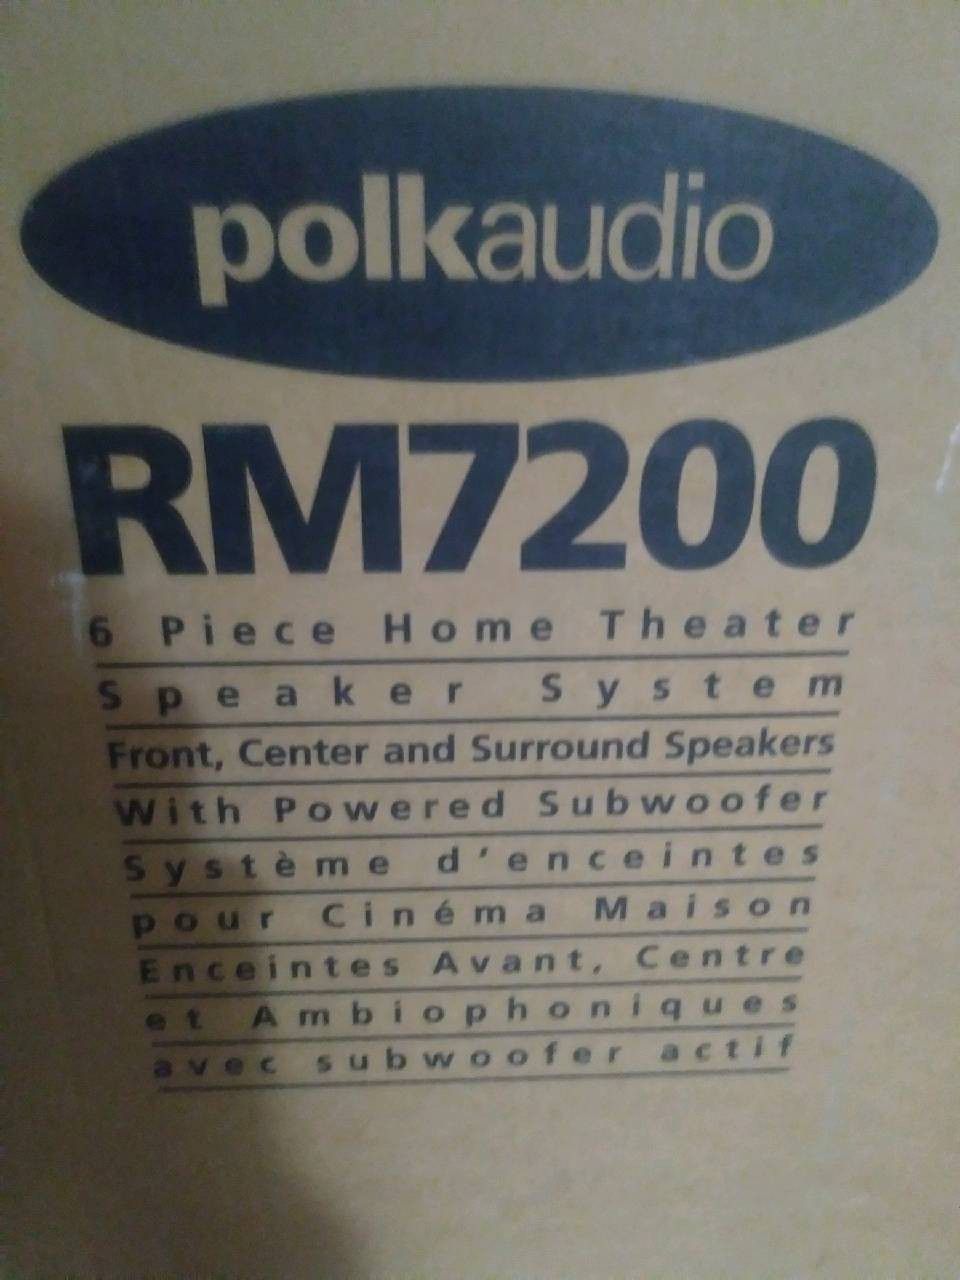 Polk Audio 6 Piece Home Theater Speaker System